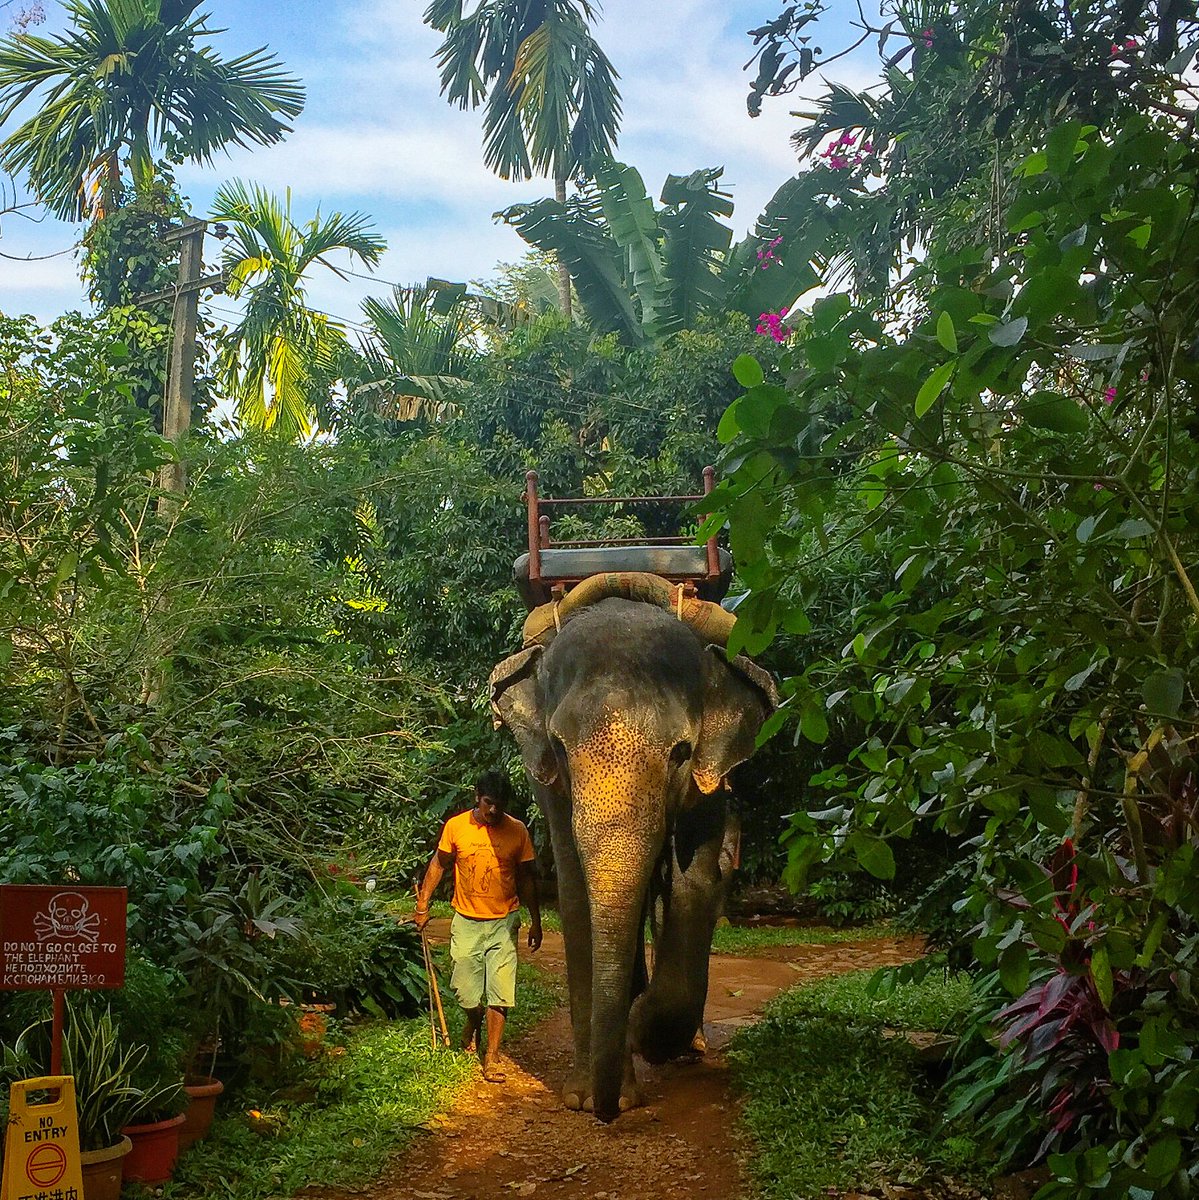 Trip to the spice farm in Goa!
.
.
#goa #goatourism #elephant #adventure #elephantsafari #incredibleindia #travelindia #travel #chalchalein #nature #naturephotography #trip #adventuretime #lonelyplanet #colorsofindia #travelphotography #chalchaleinlife #tripoto #instapic